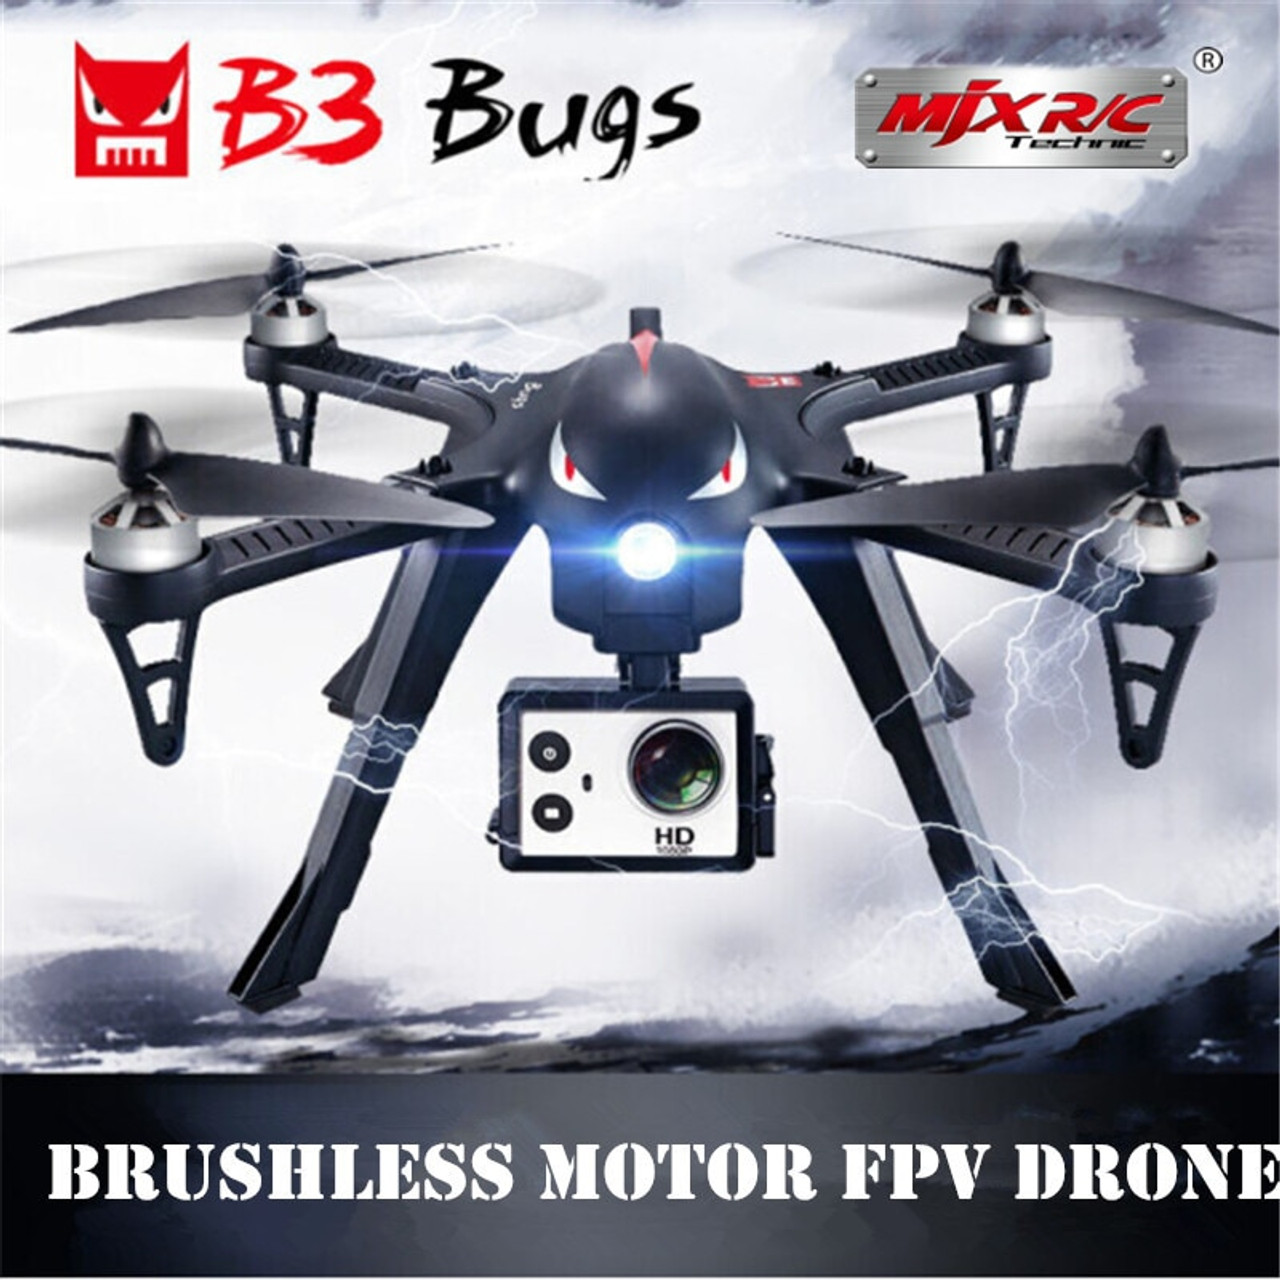 mjx b3 bugs 3 rc quadcopter